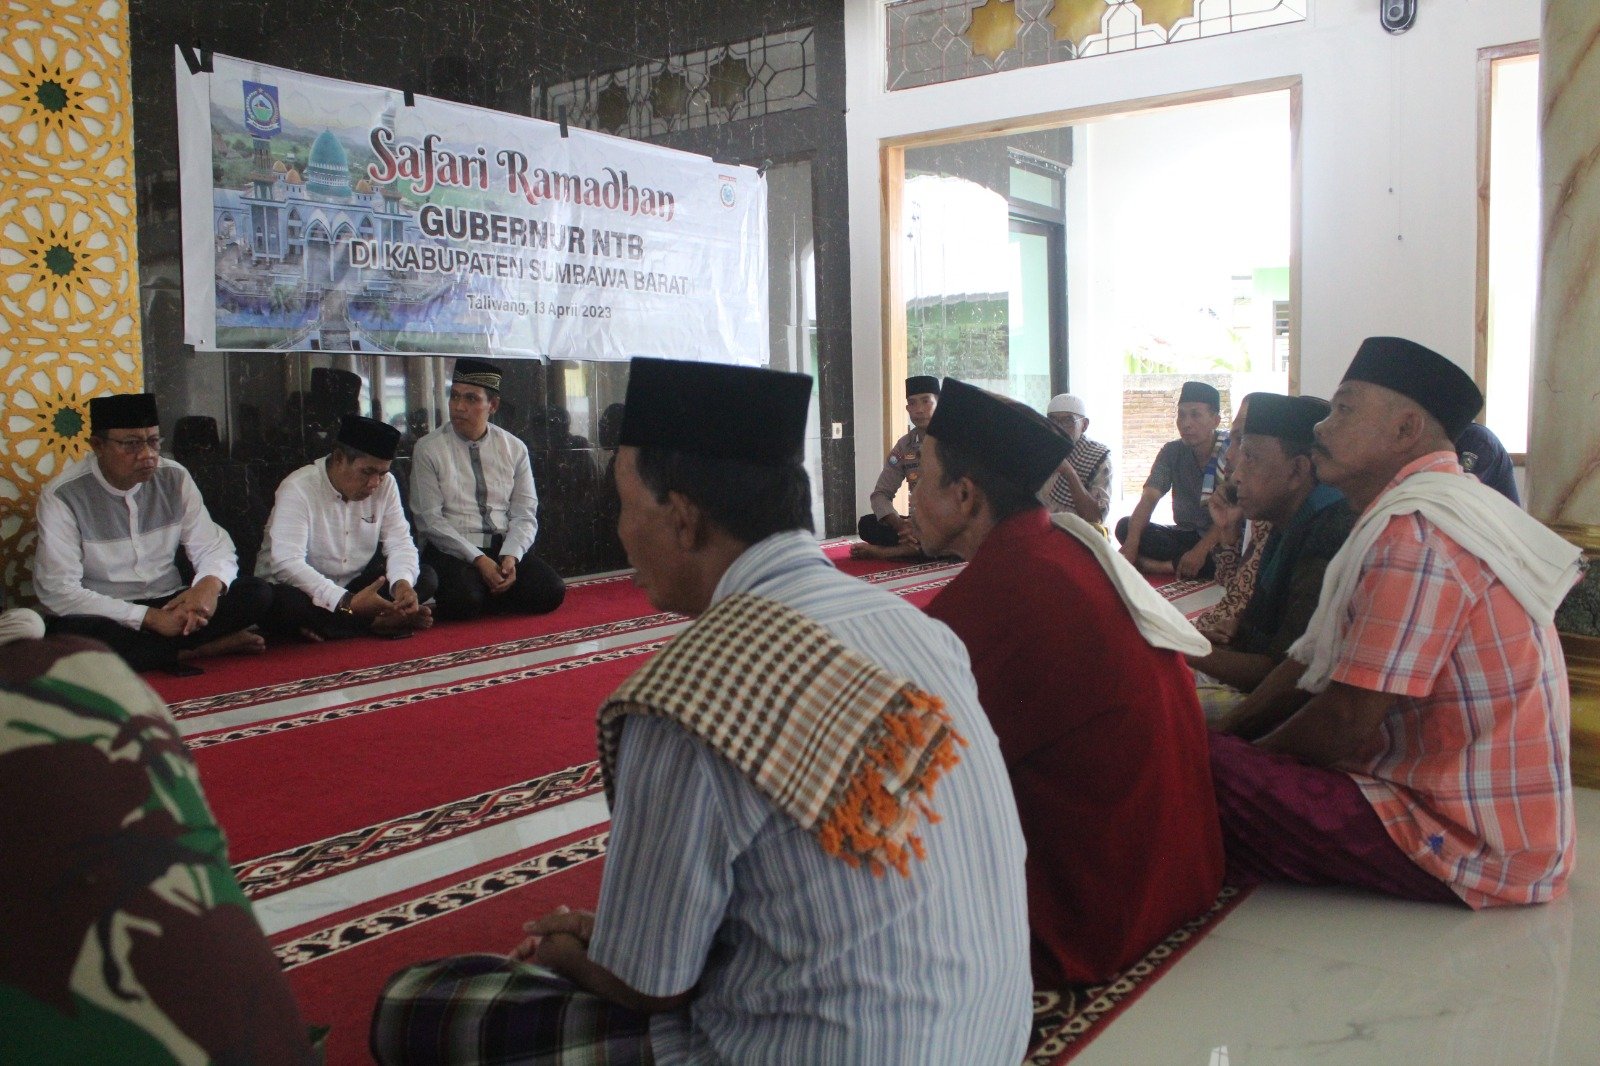 Safari Ramadan Gubernur di Sumbawa Barat Diwakili Kadis Ketahanan Pangan NTB